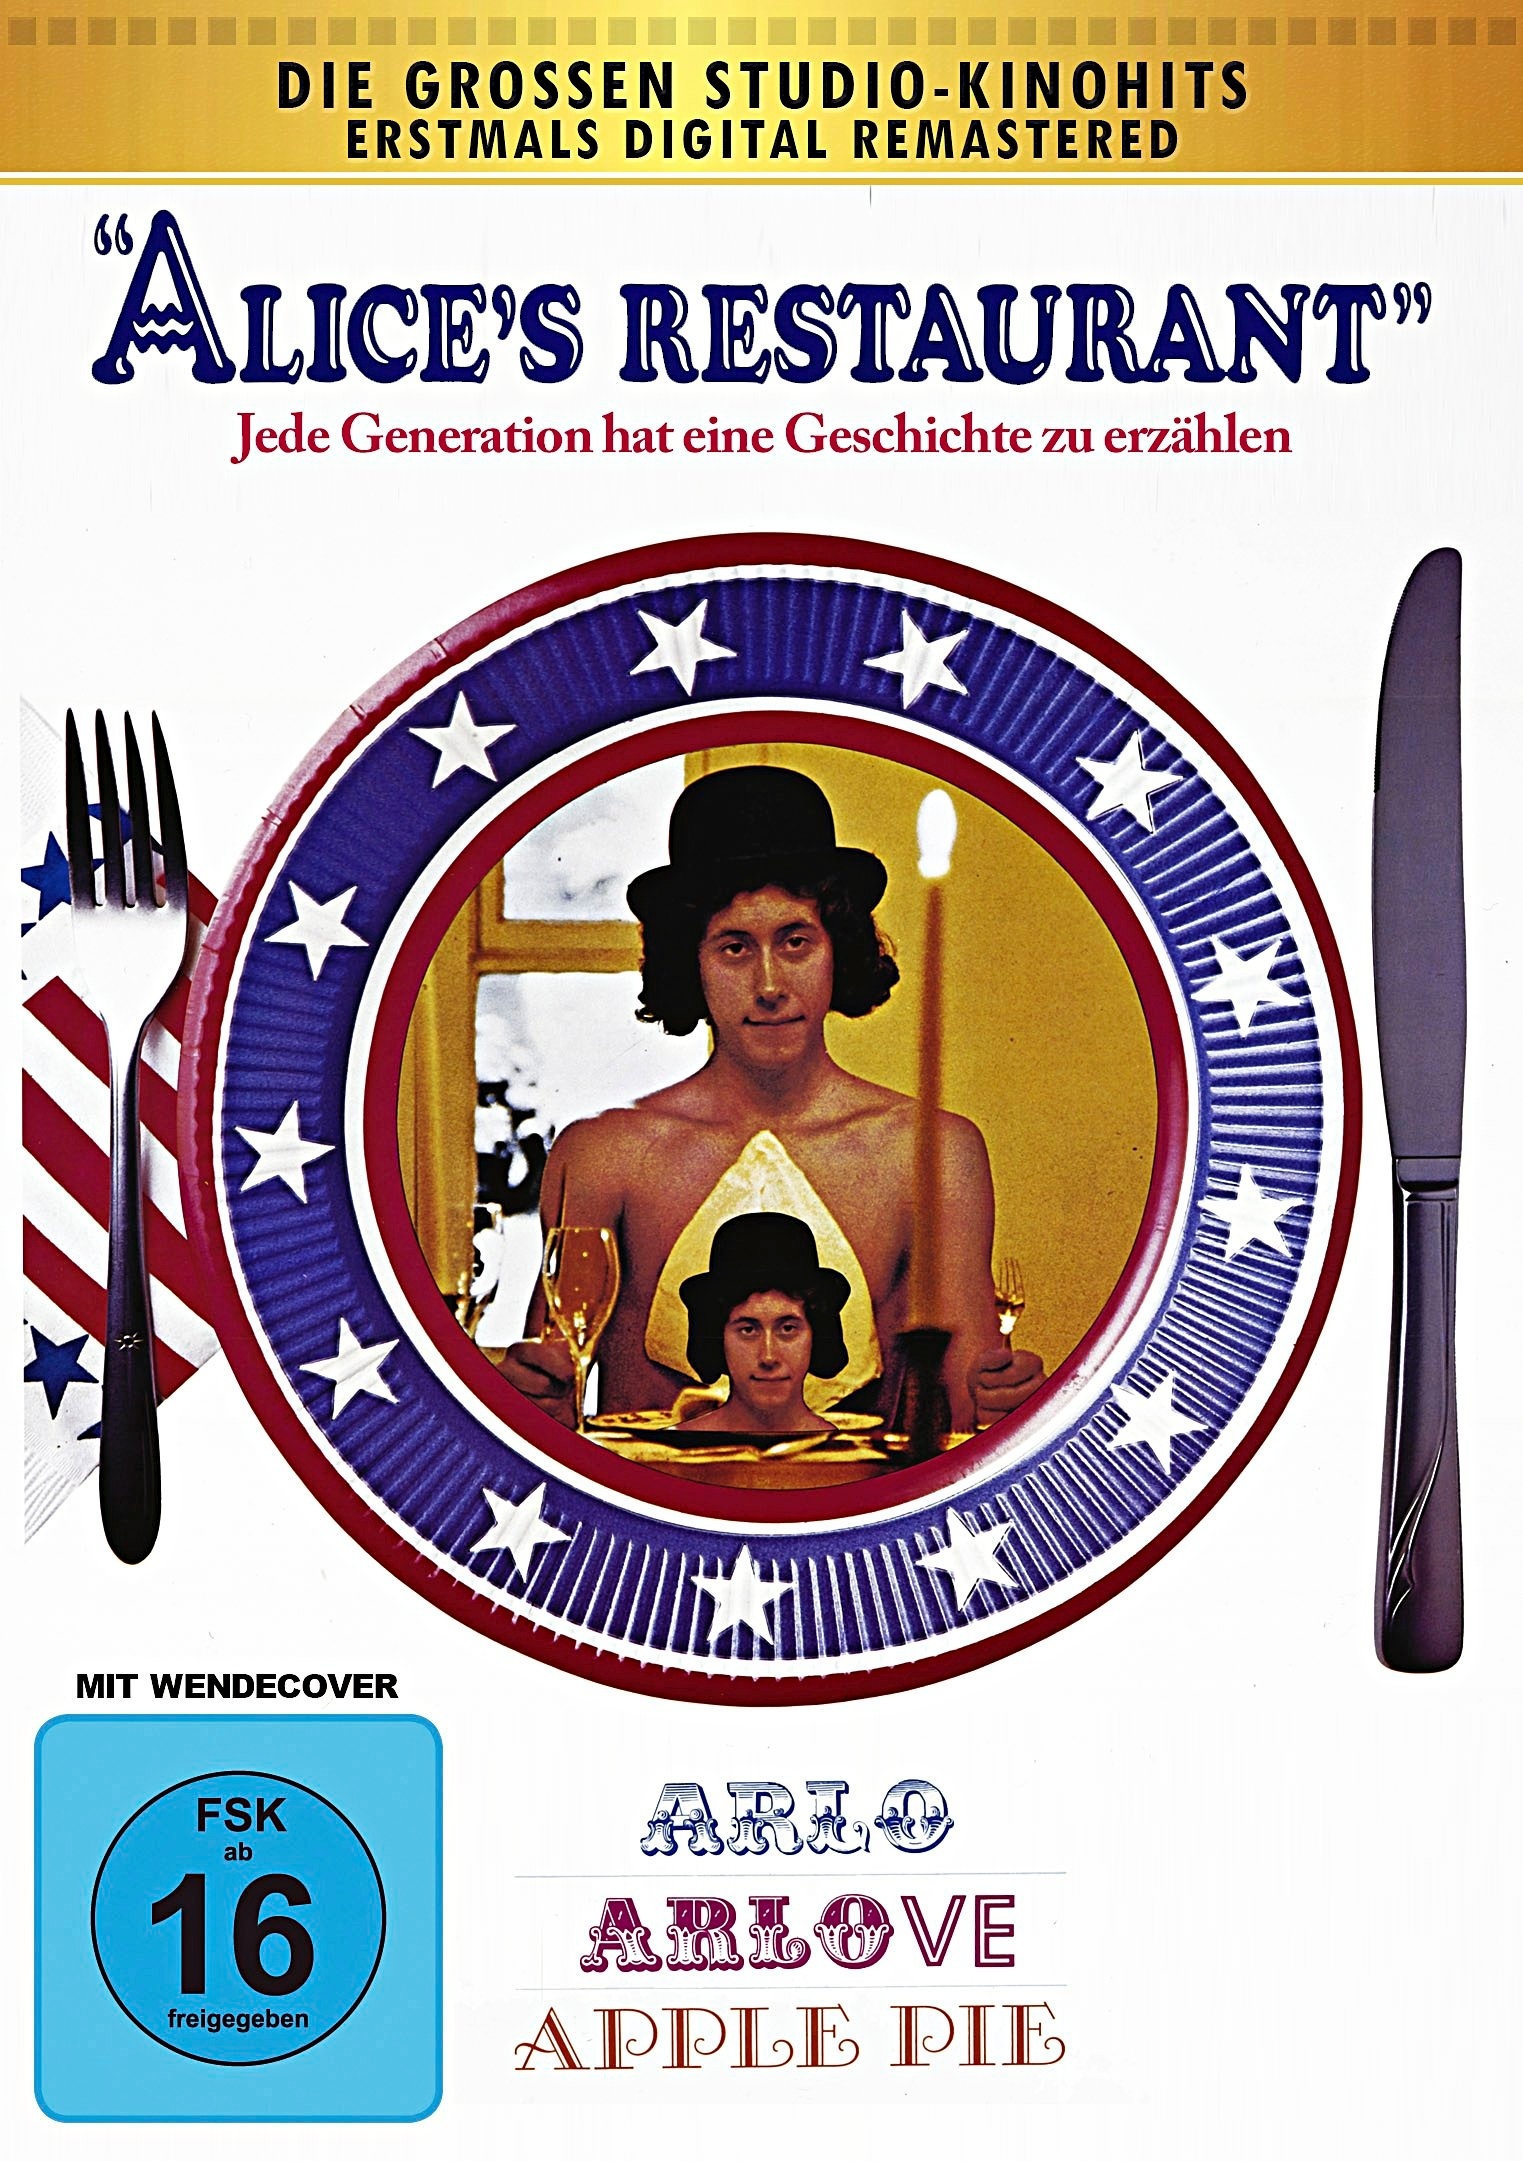 Alice's Restaurant  Dvd (DVD)